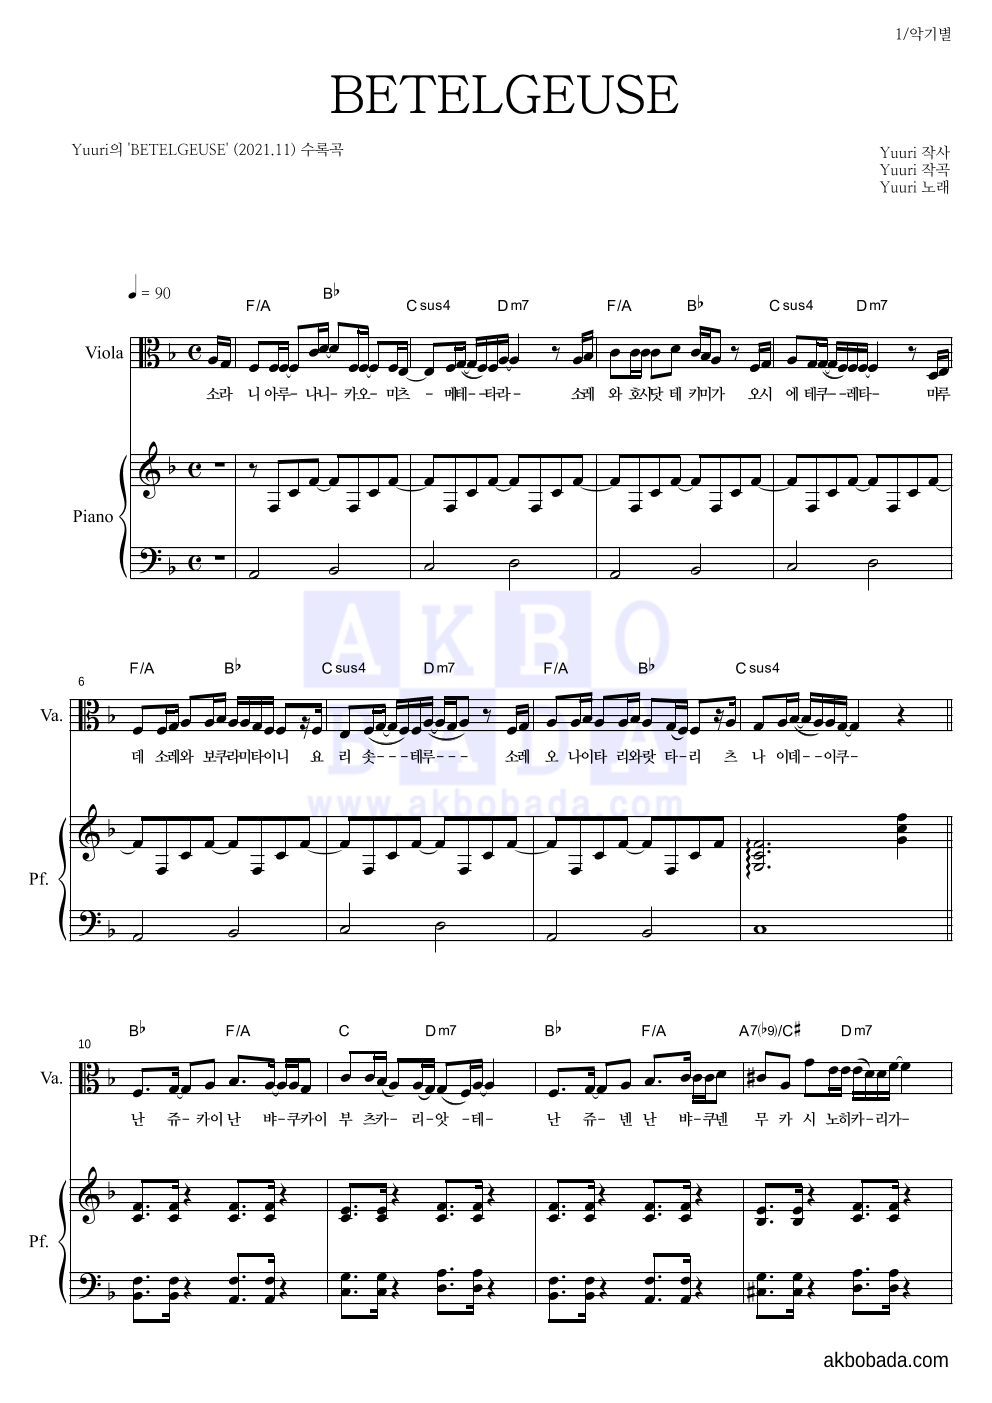 Yuuri - BETELGEUSE 비올라&피아노 악보 